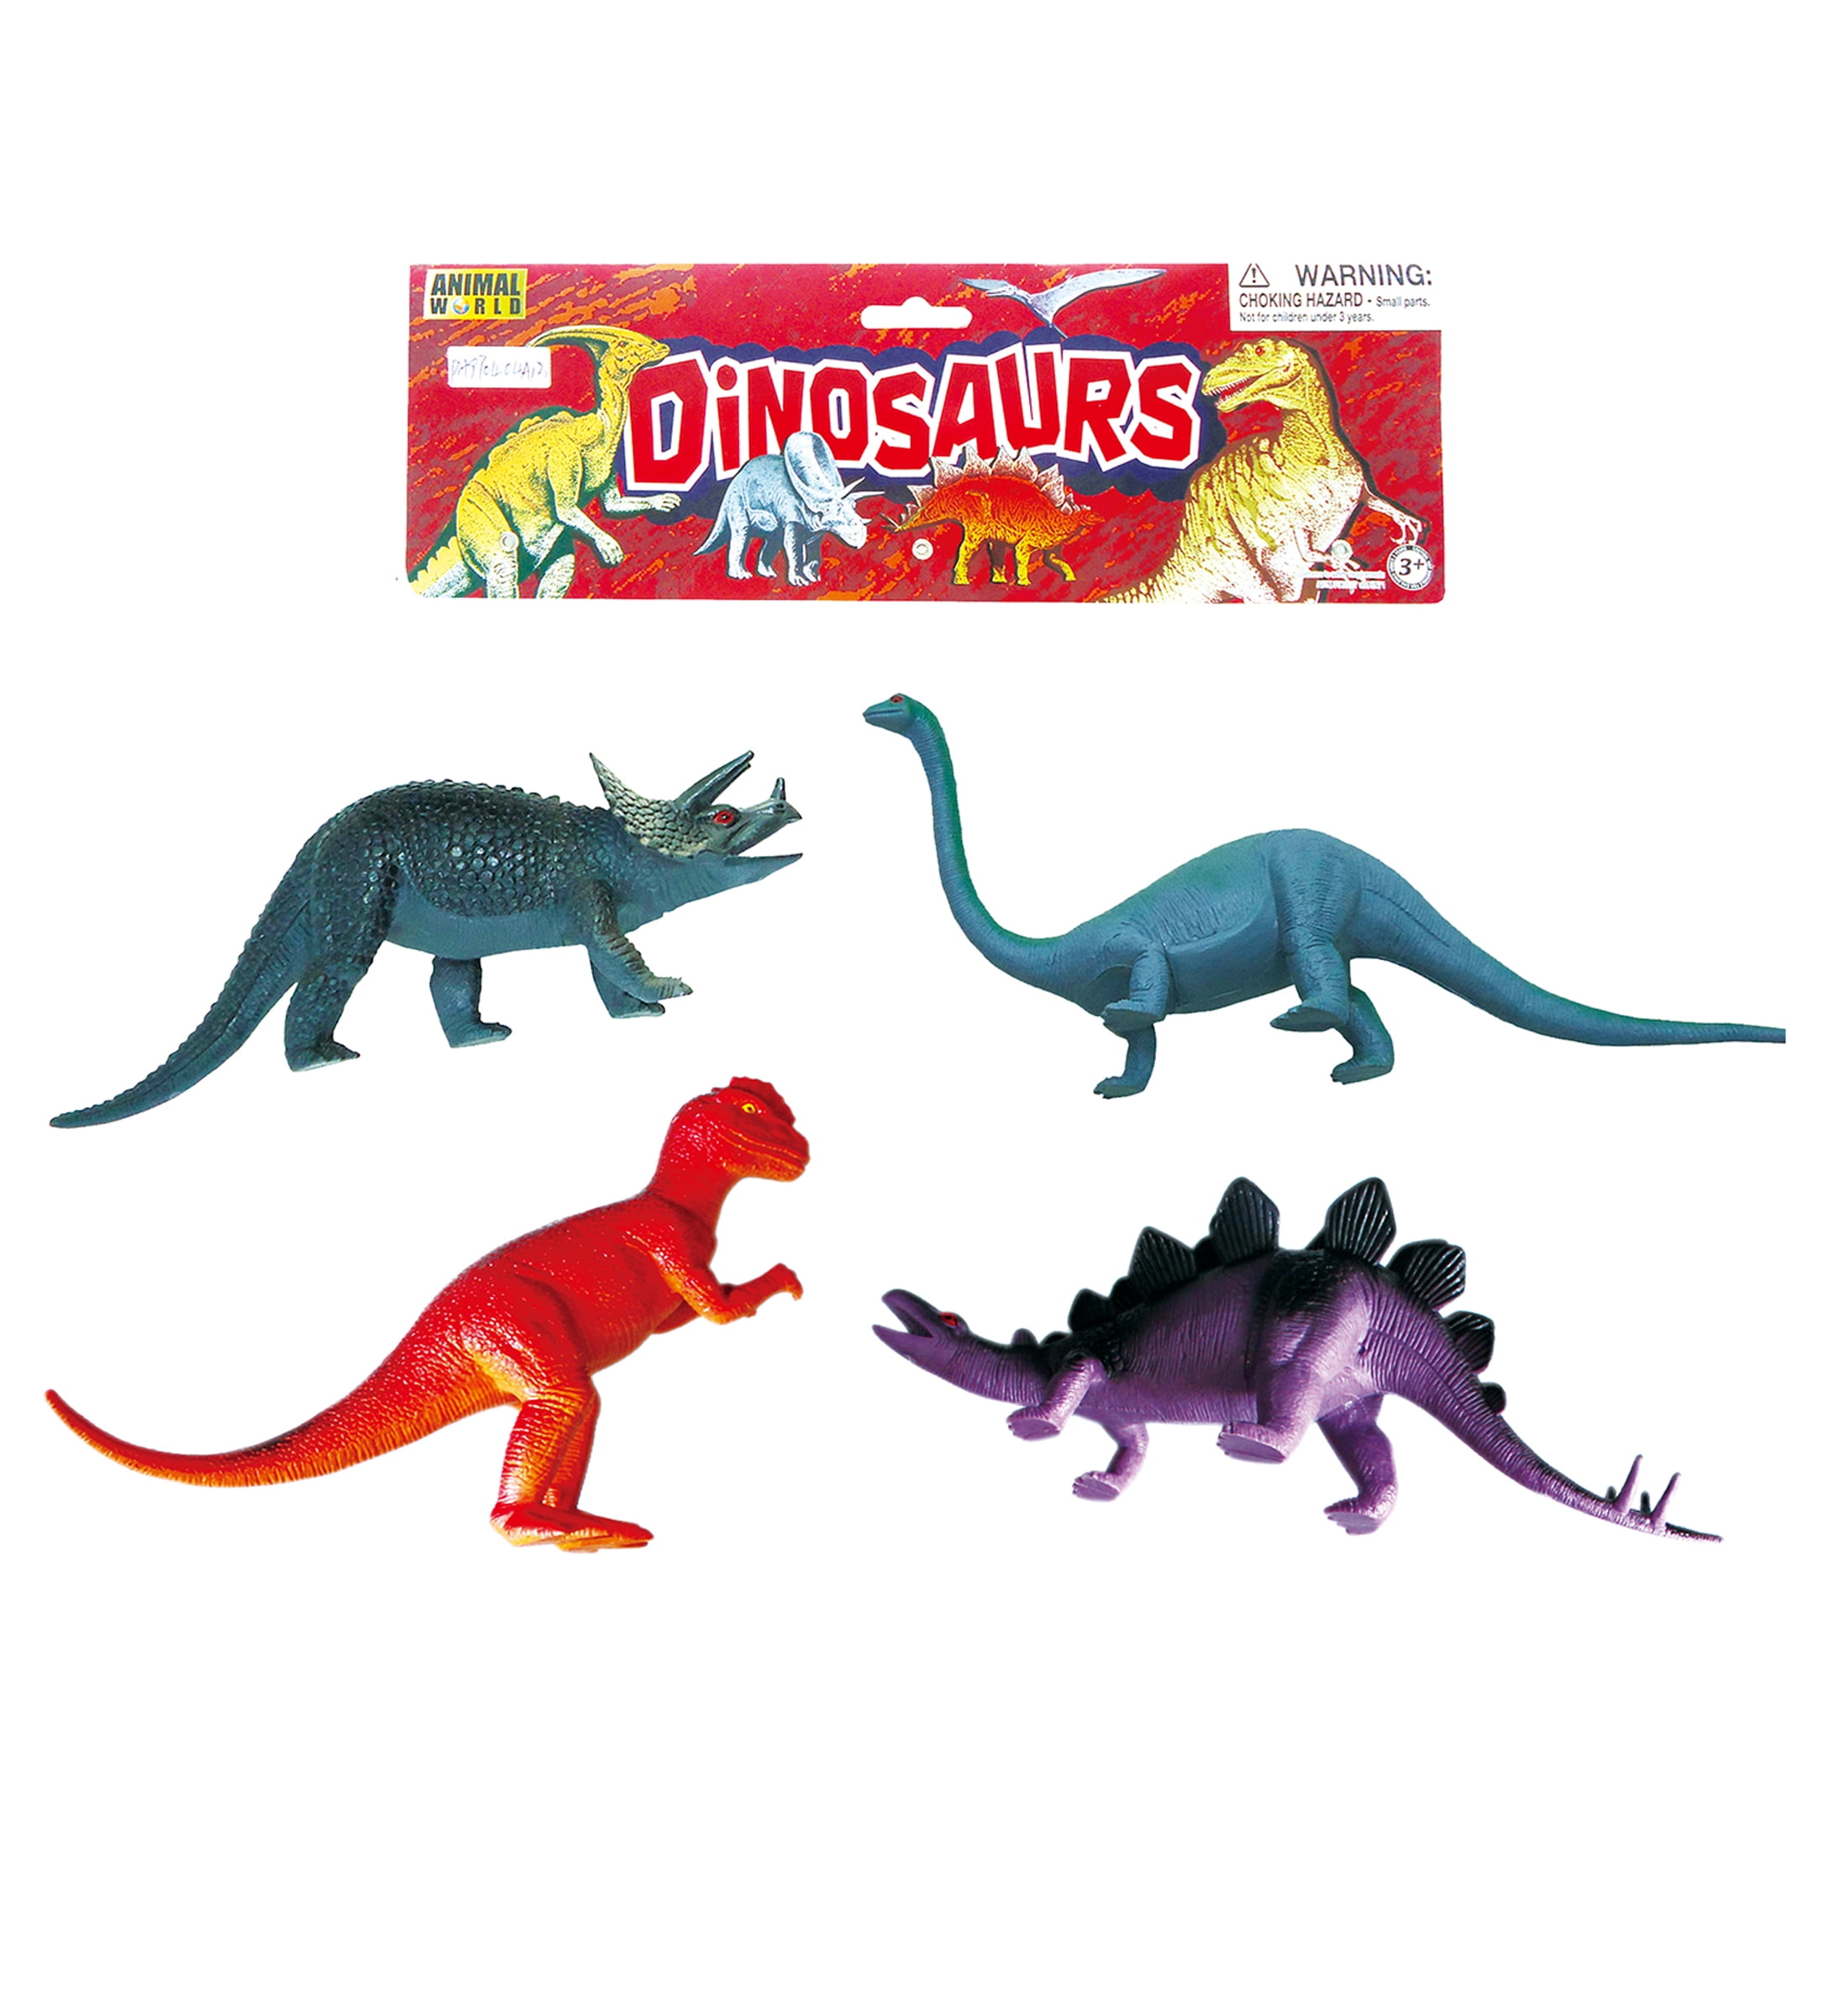 Educational Large Brachiosaurus Dinosaur Toy Model Birthday Gift For Boy Kids 